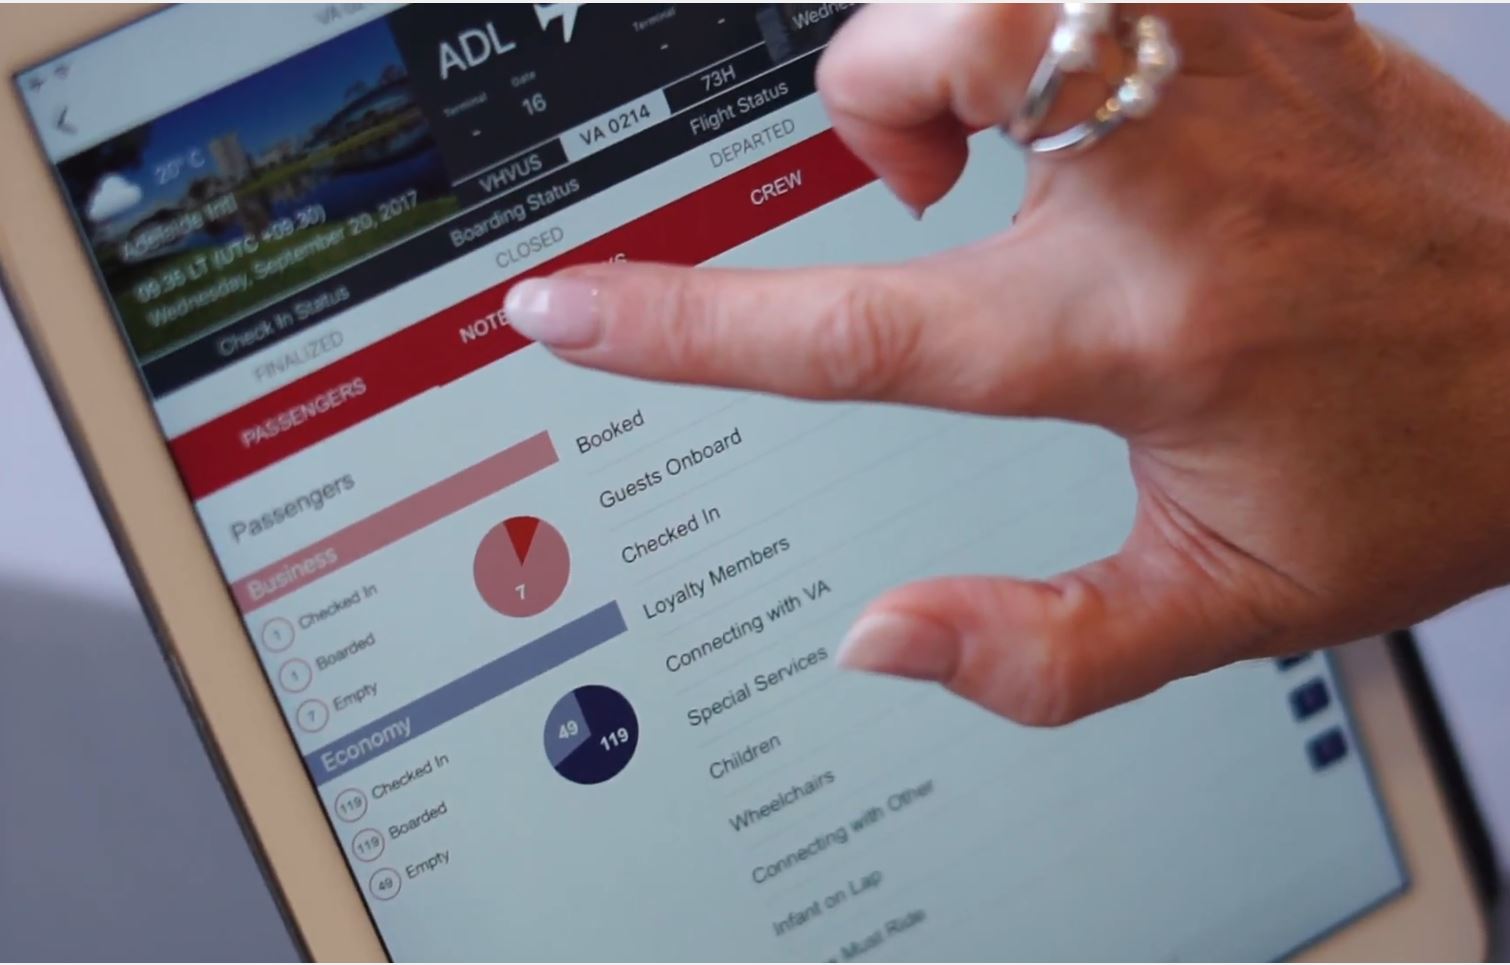 CrewTab has digitally-transformed Virgin Australia’s cabin crew experience